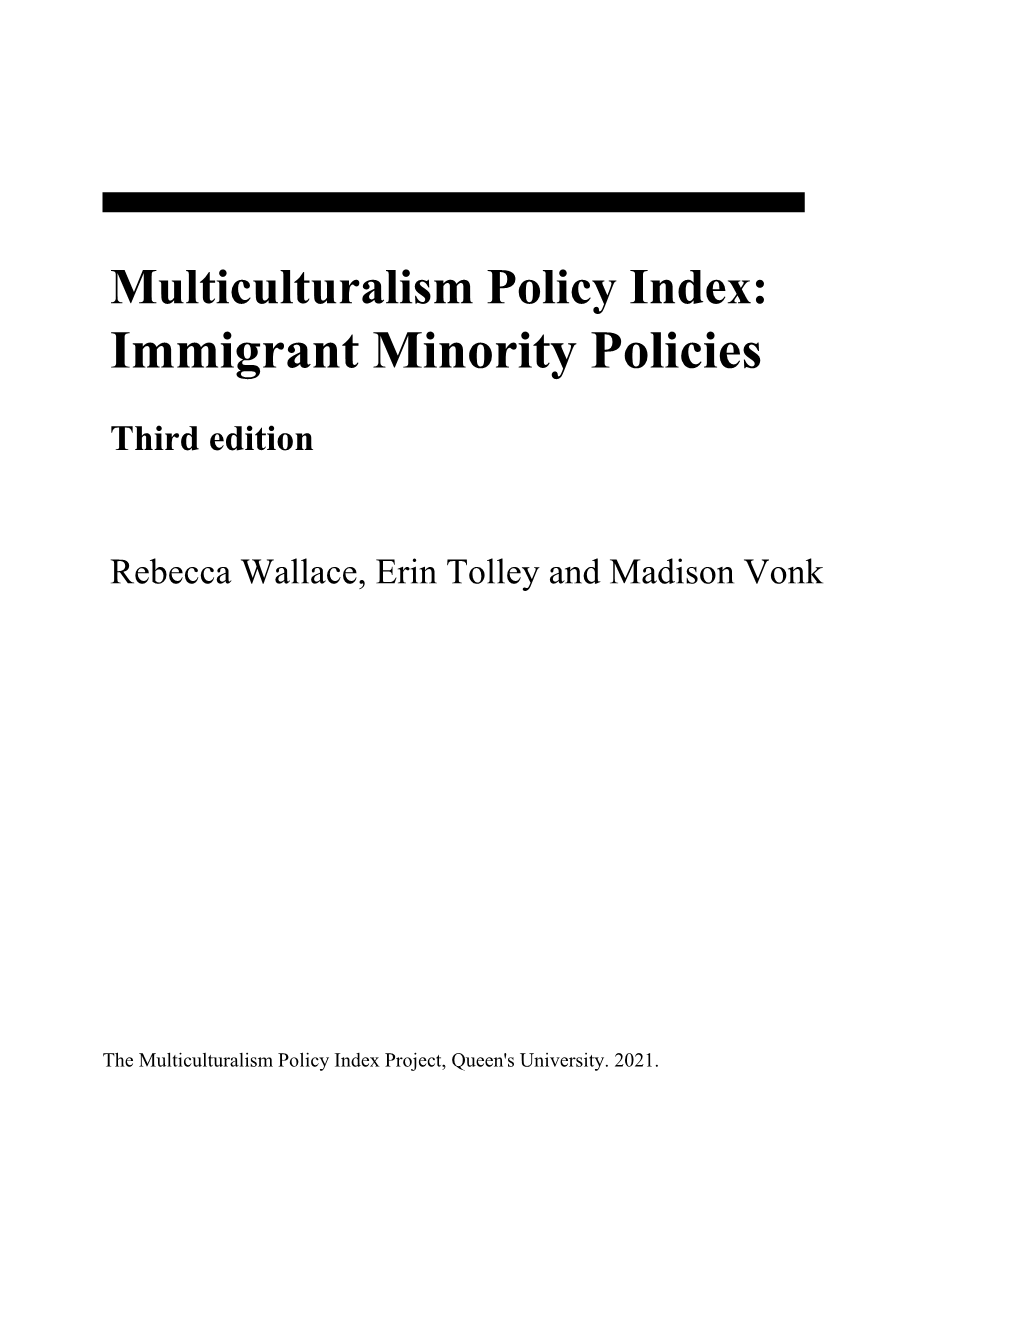 MCP Immigrant Minorities Index Evidence